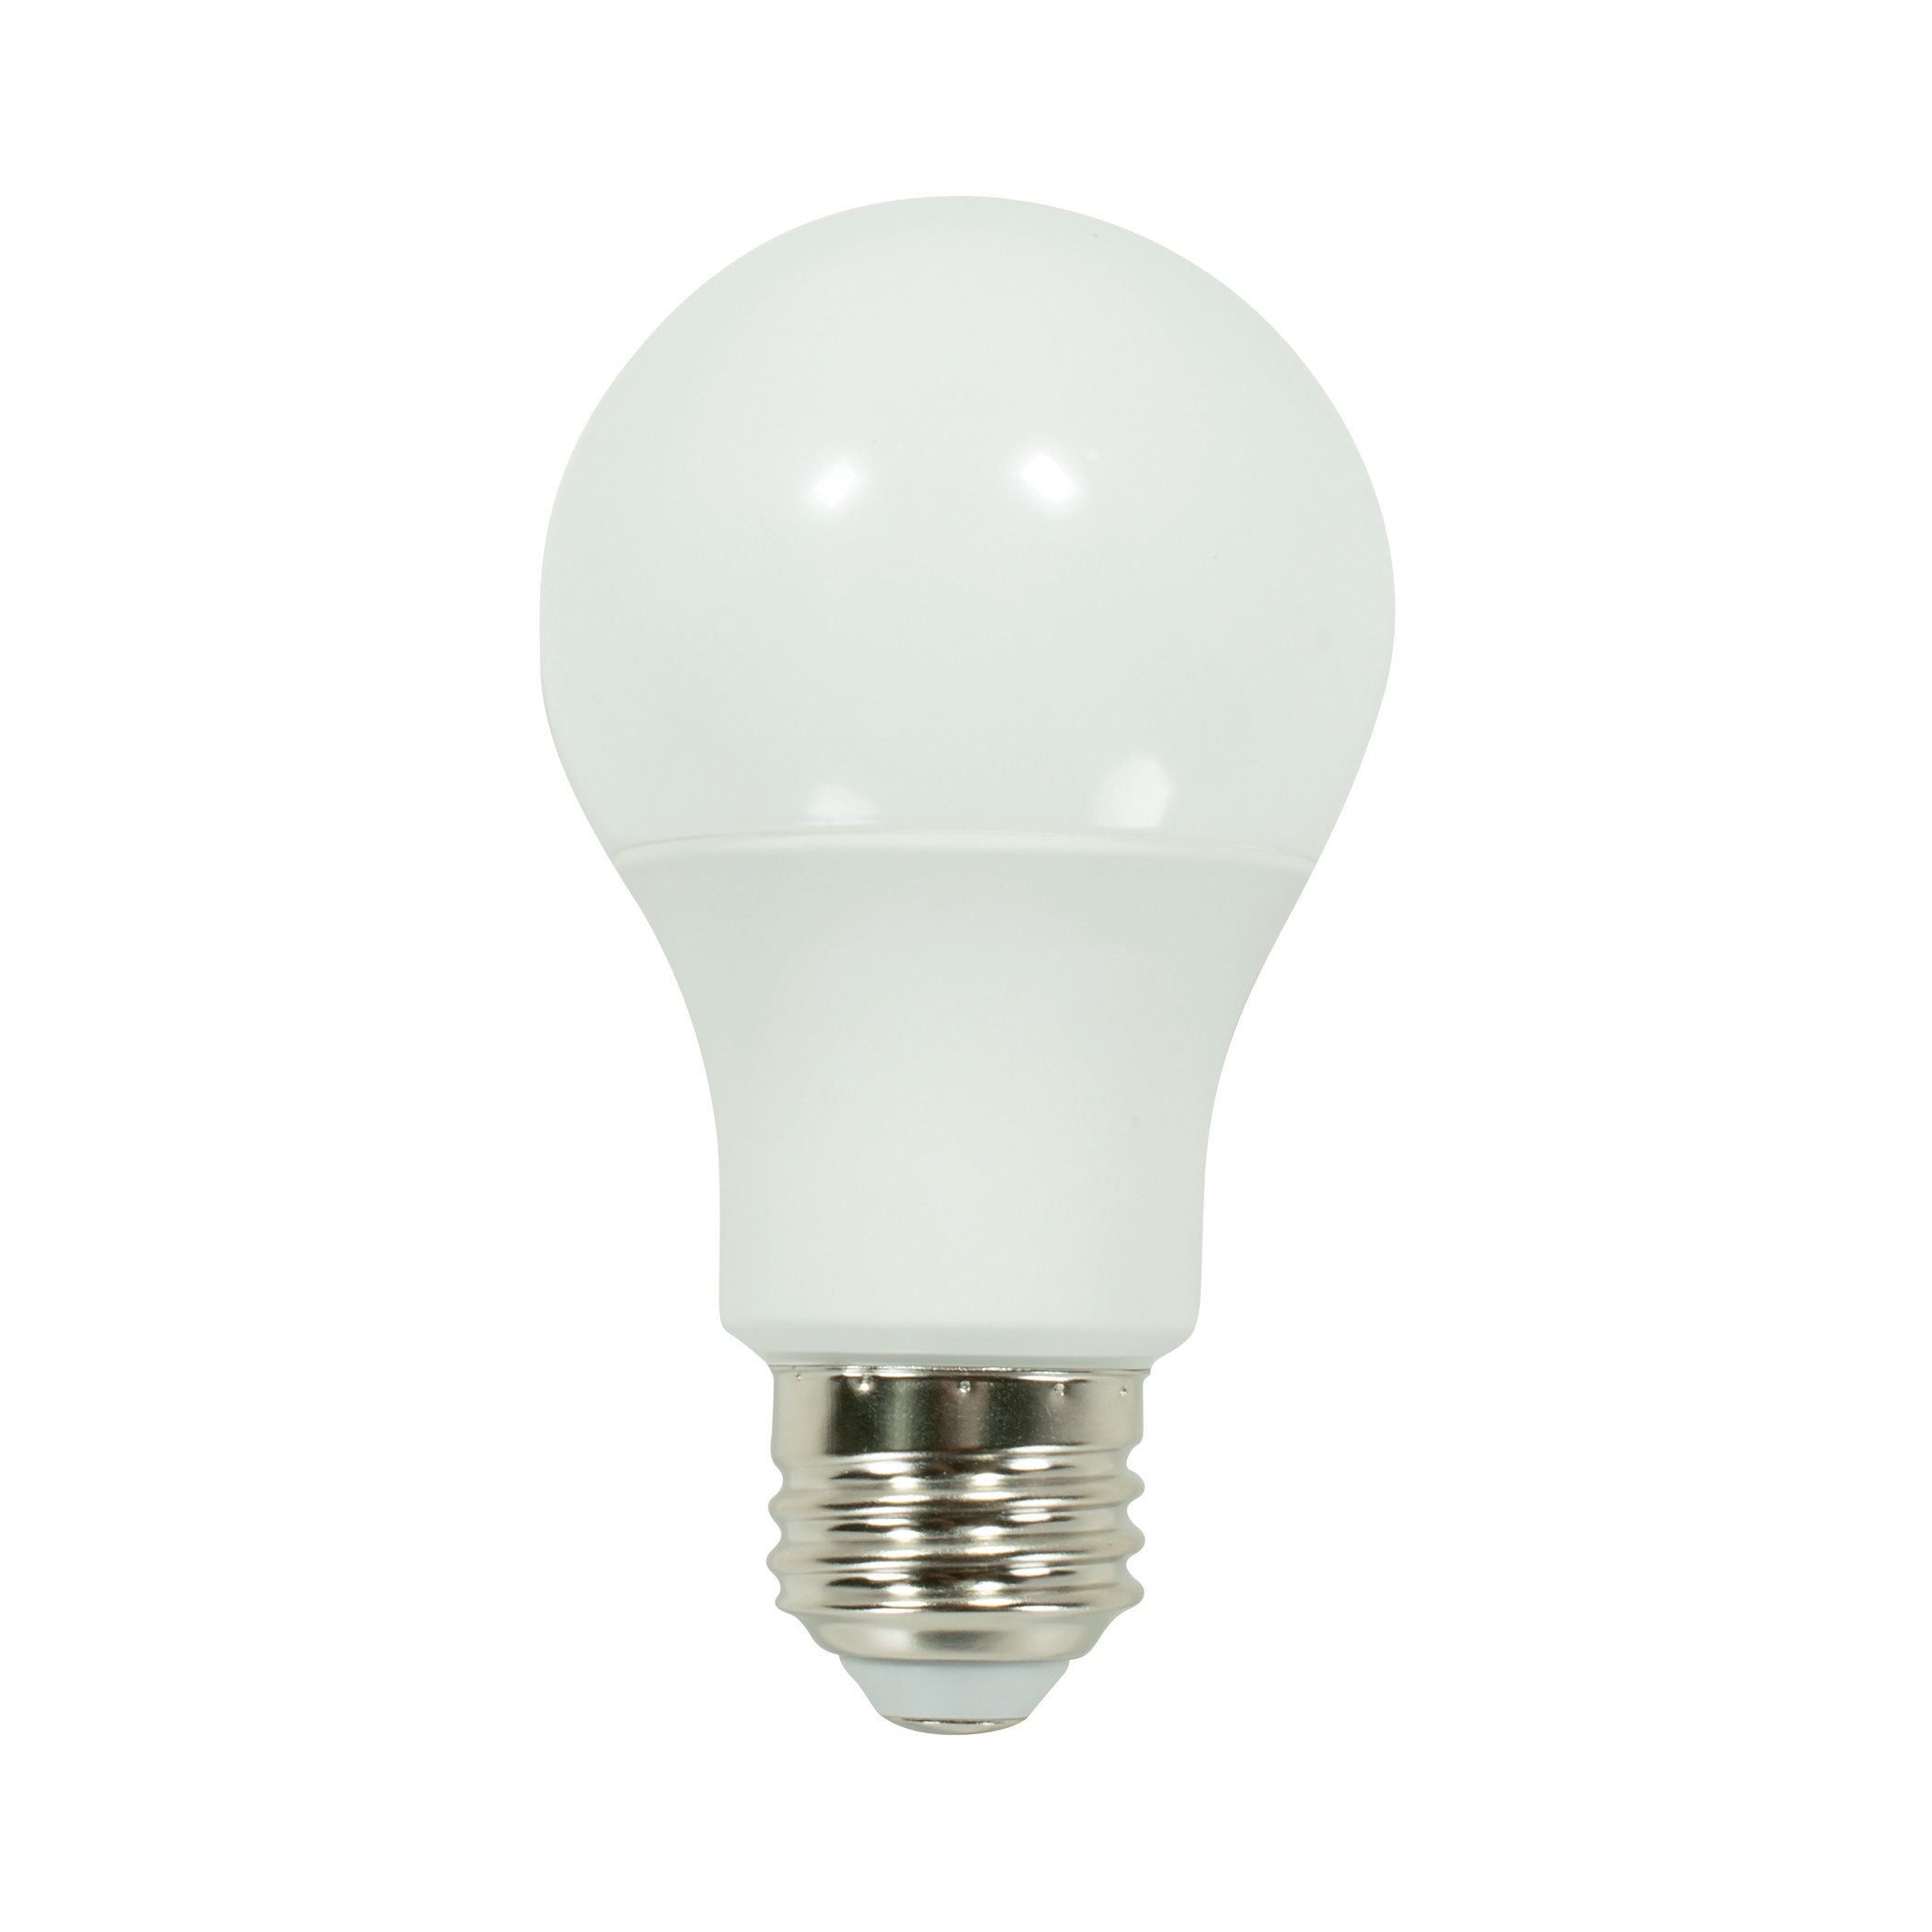 1500 Lumen LED A19 Bulb, 15-Watt, 100-Watt Equivalent E26 - 96 Pack Master Case